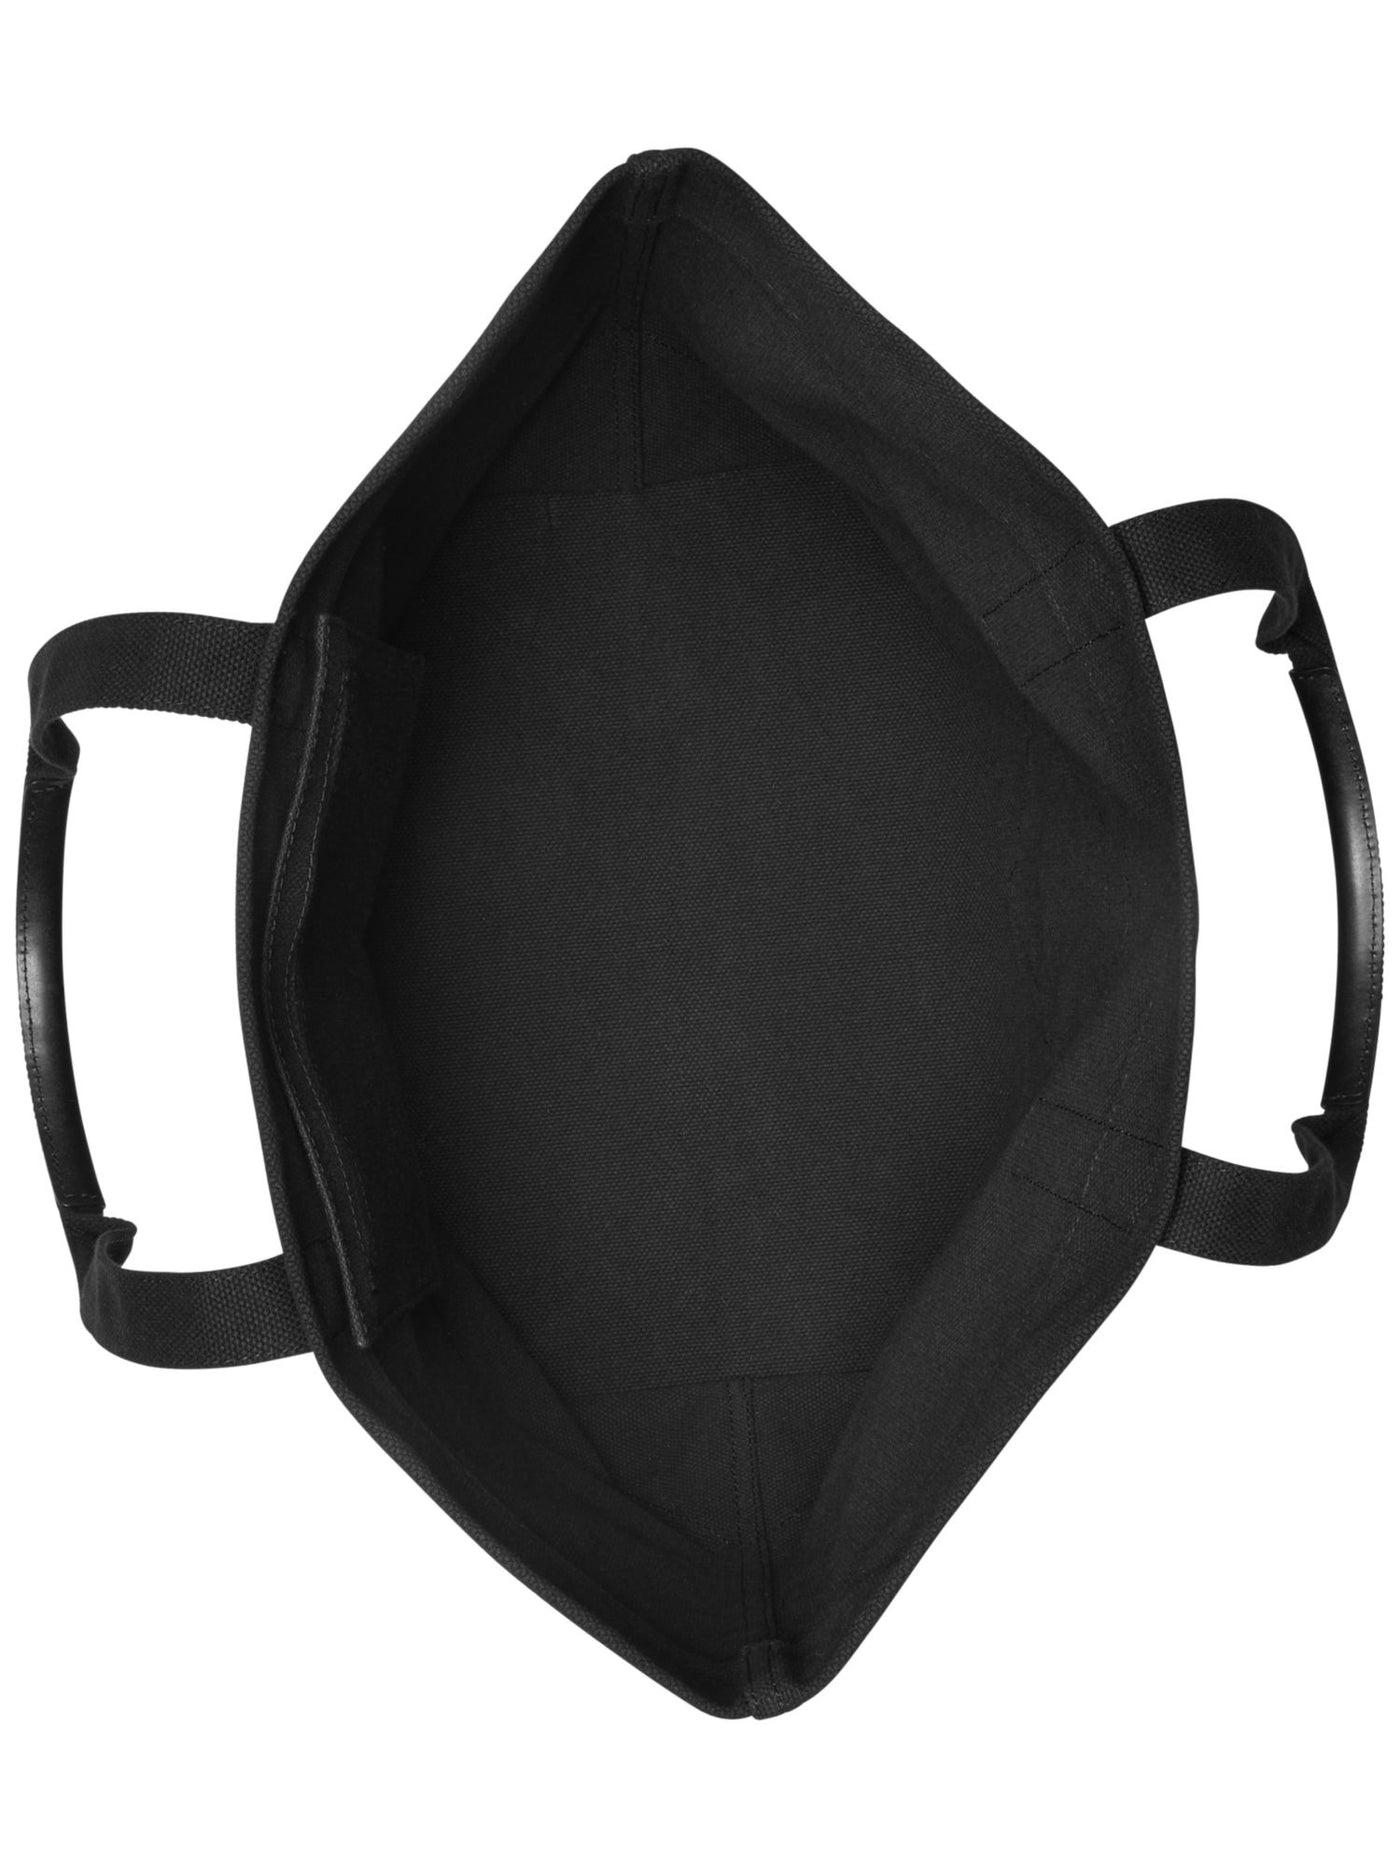 MICHAEL KORS Women's Black The Michael Logo Canvas Hanging Charm Foldable Double Flat Strap Tote Handbag Purse